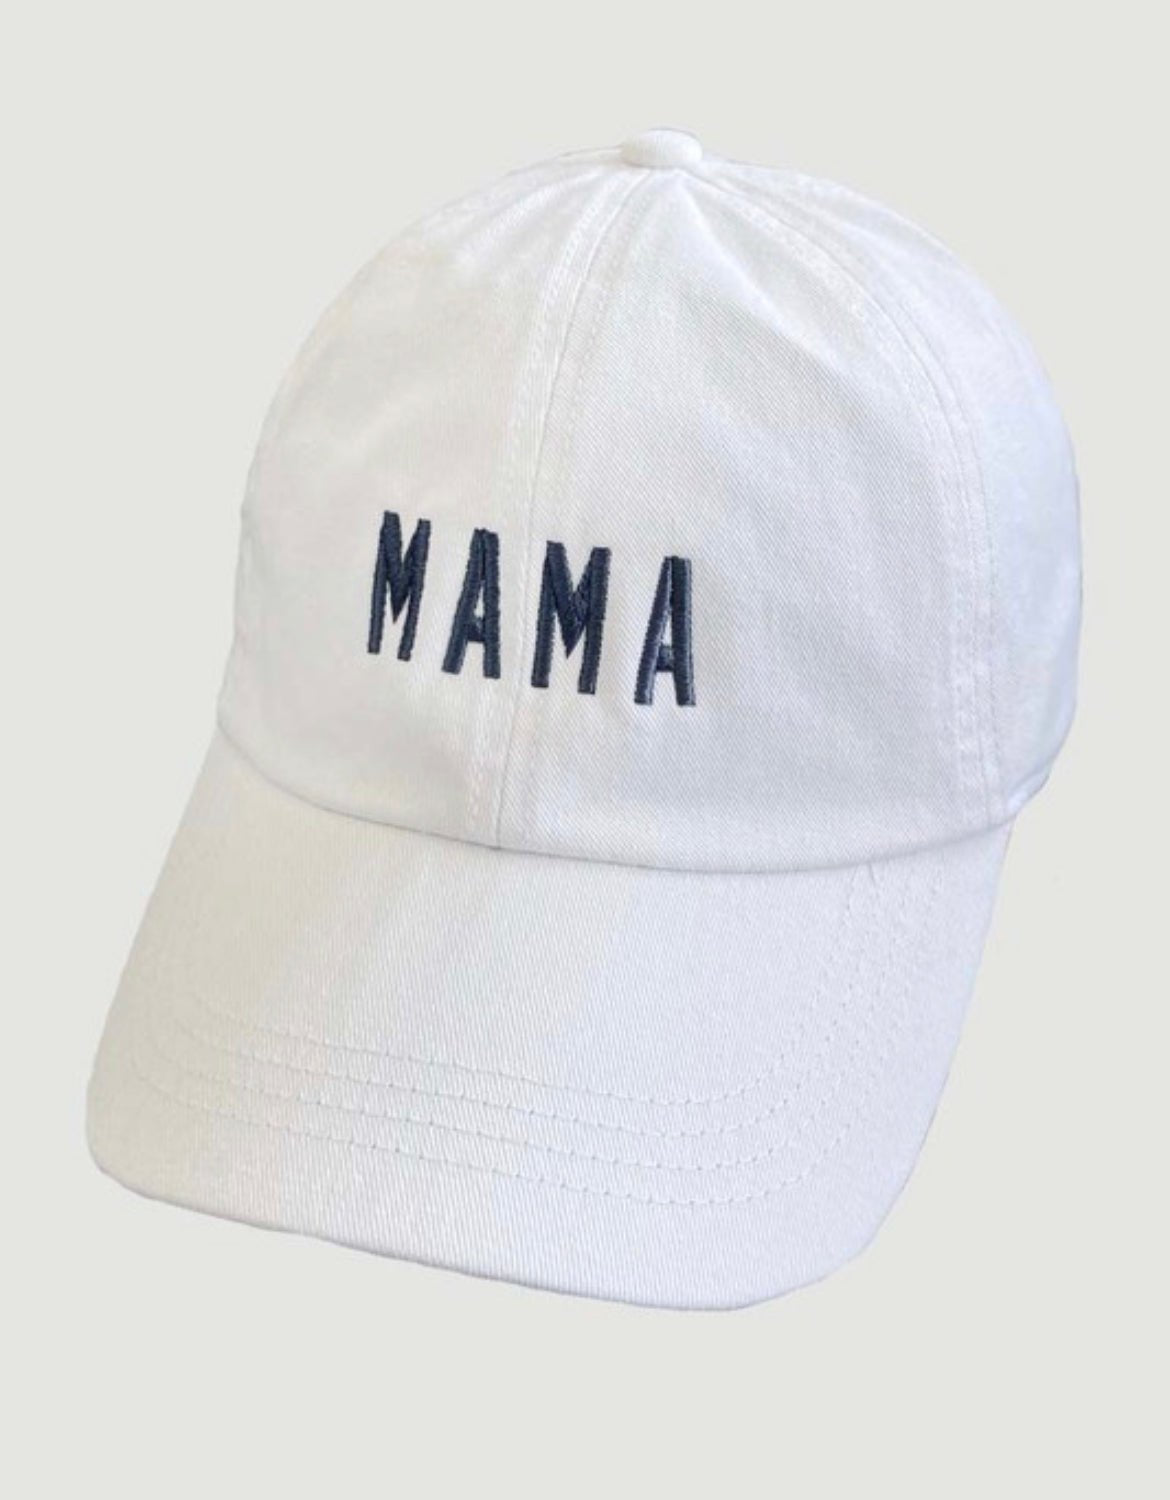 White Mama Ball Cap - The Bump & Company LLC